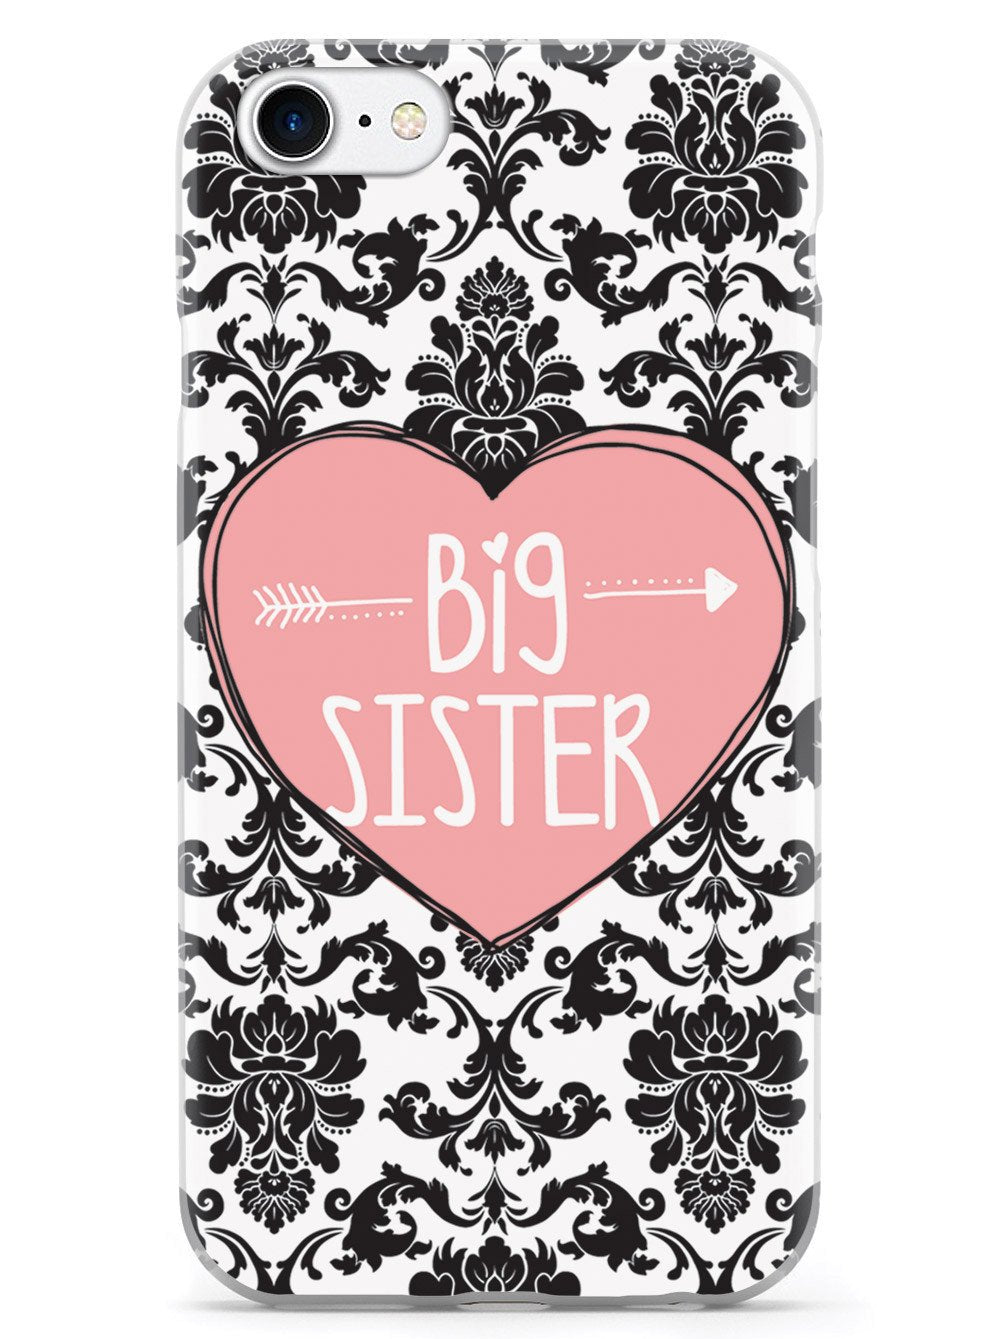 Sisterly Love - Big Sister - Damask Case